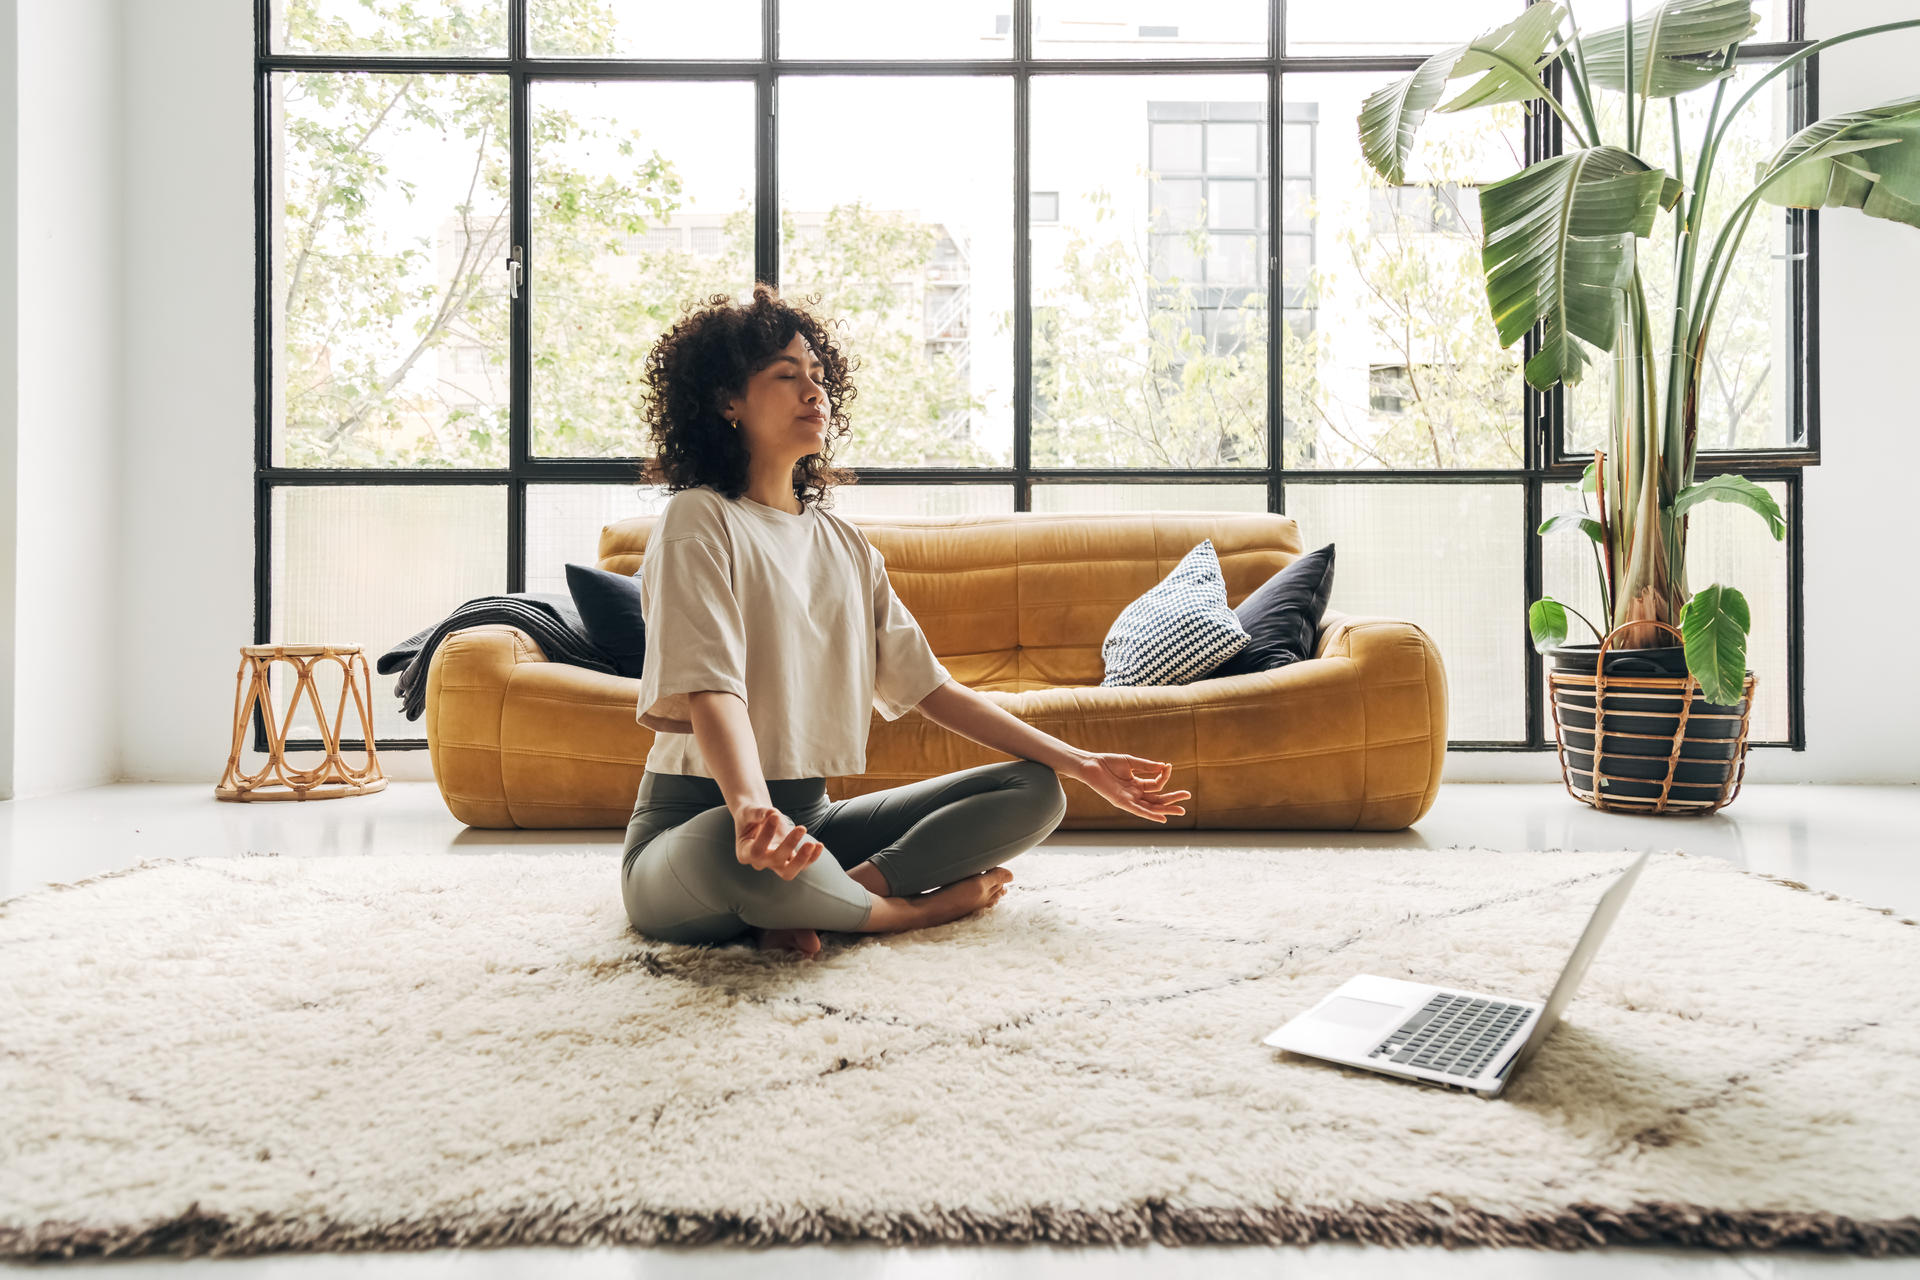 laptop yoga studio business plan image